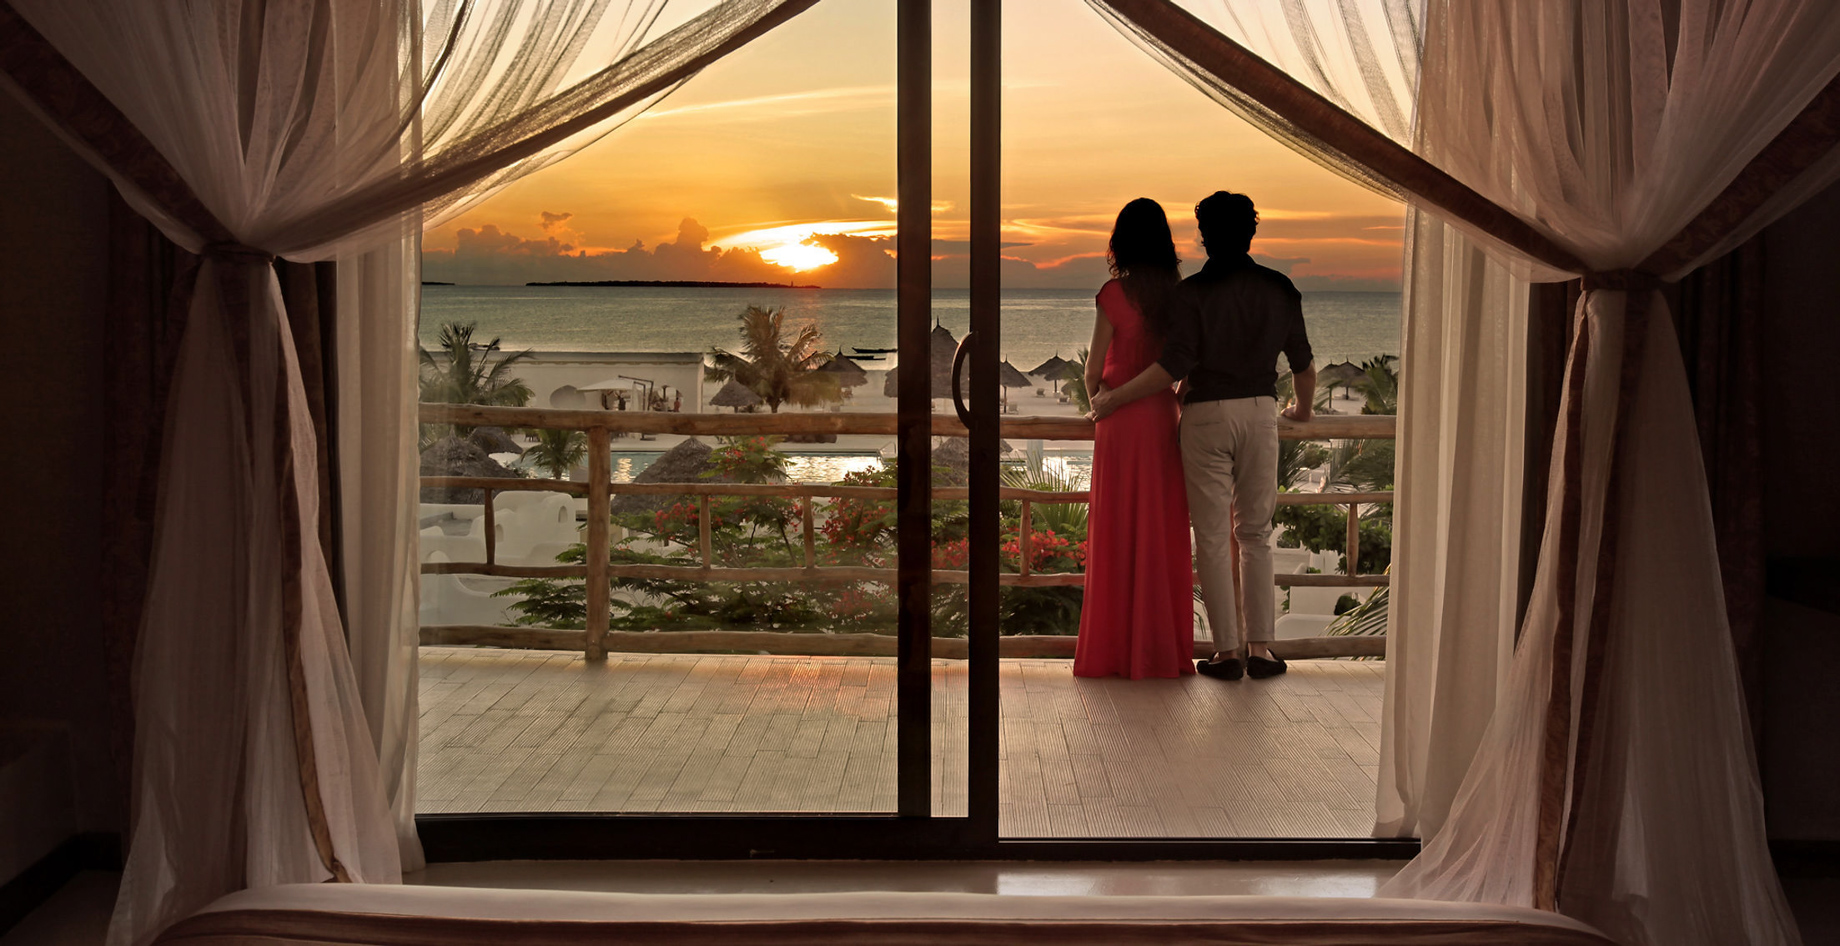 Gold Zanzibar Beach House & Spa Resort – Nungwi, Zanzibar, Tanzania – Deluxe Ocean View Room Sunset